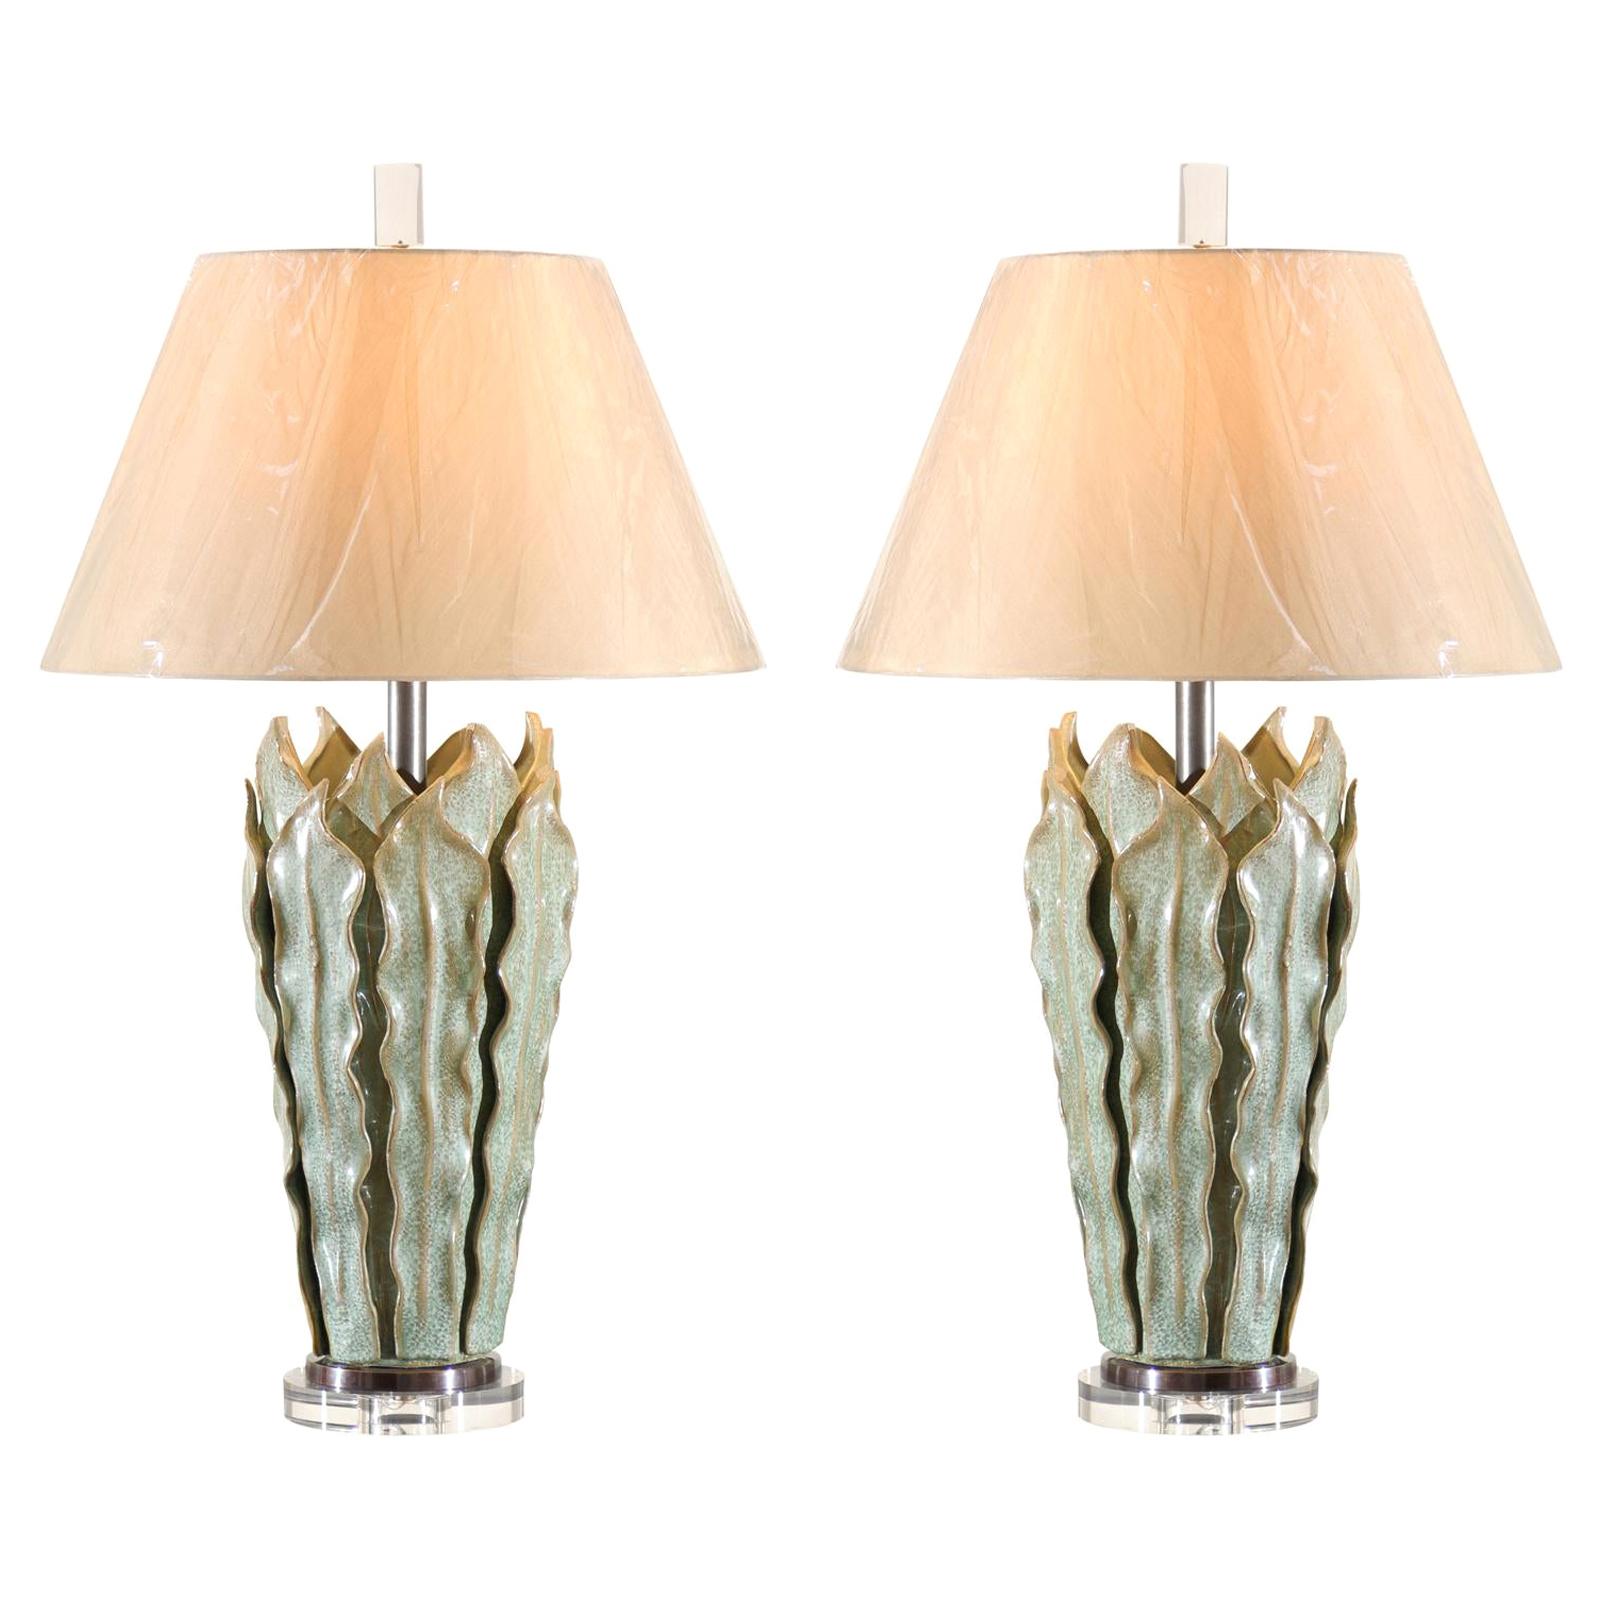 Stunning Pair of Ceramic Fern Leaf Vessels as Custom Lamps